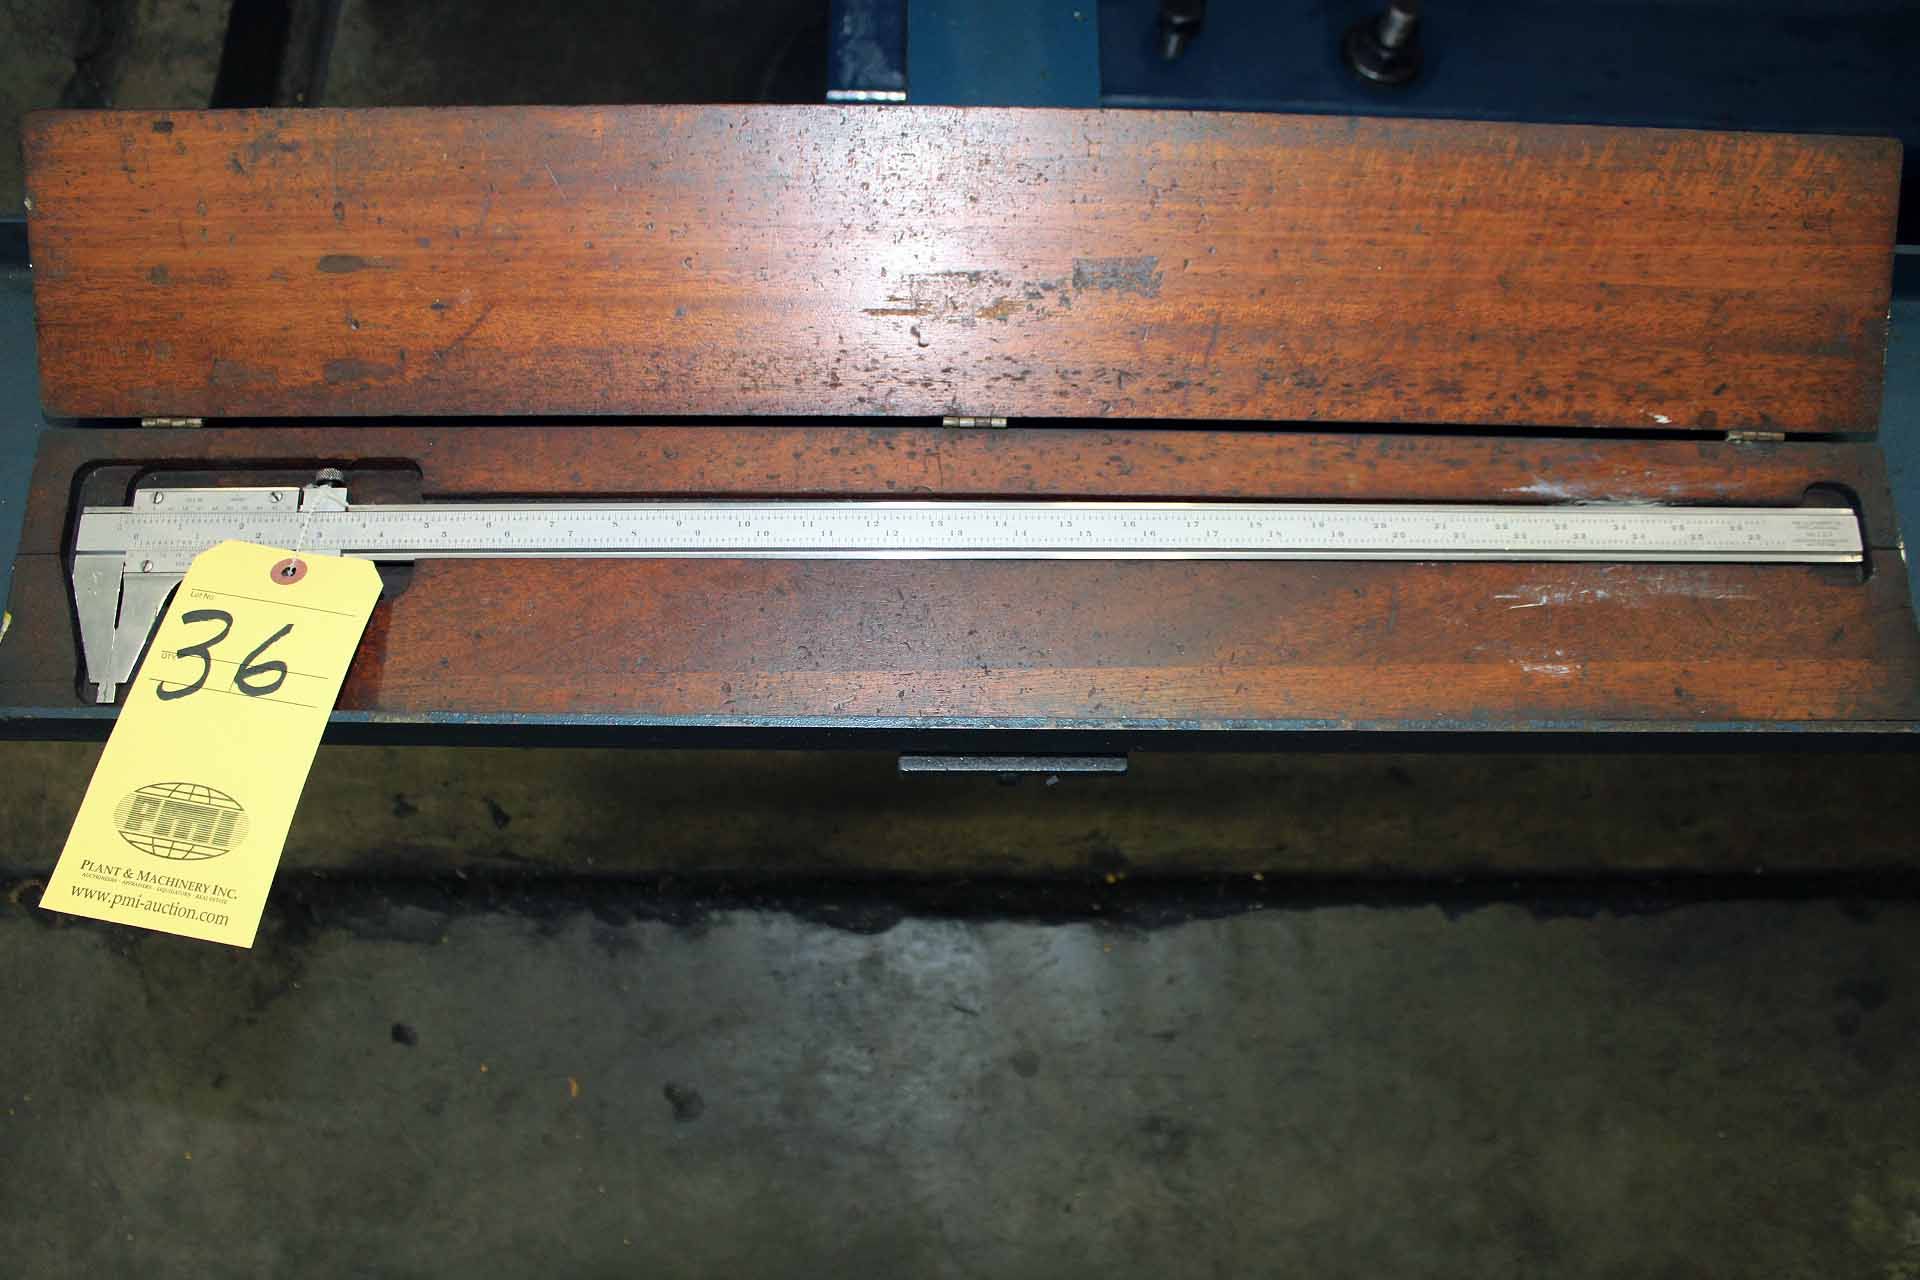 LOT CONSISTING OF: Starrett vernier caliper (for I.D. & O.D. measurements), hardened & stabilized